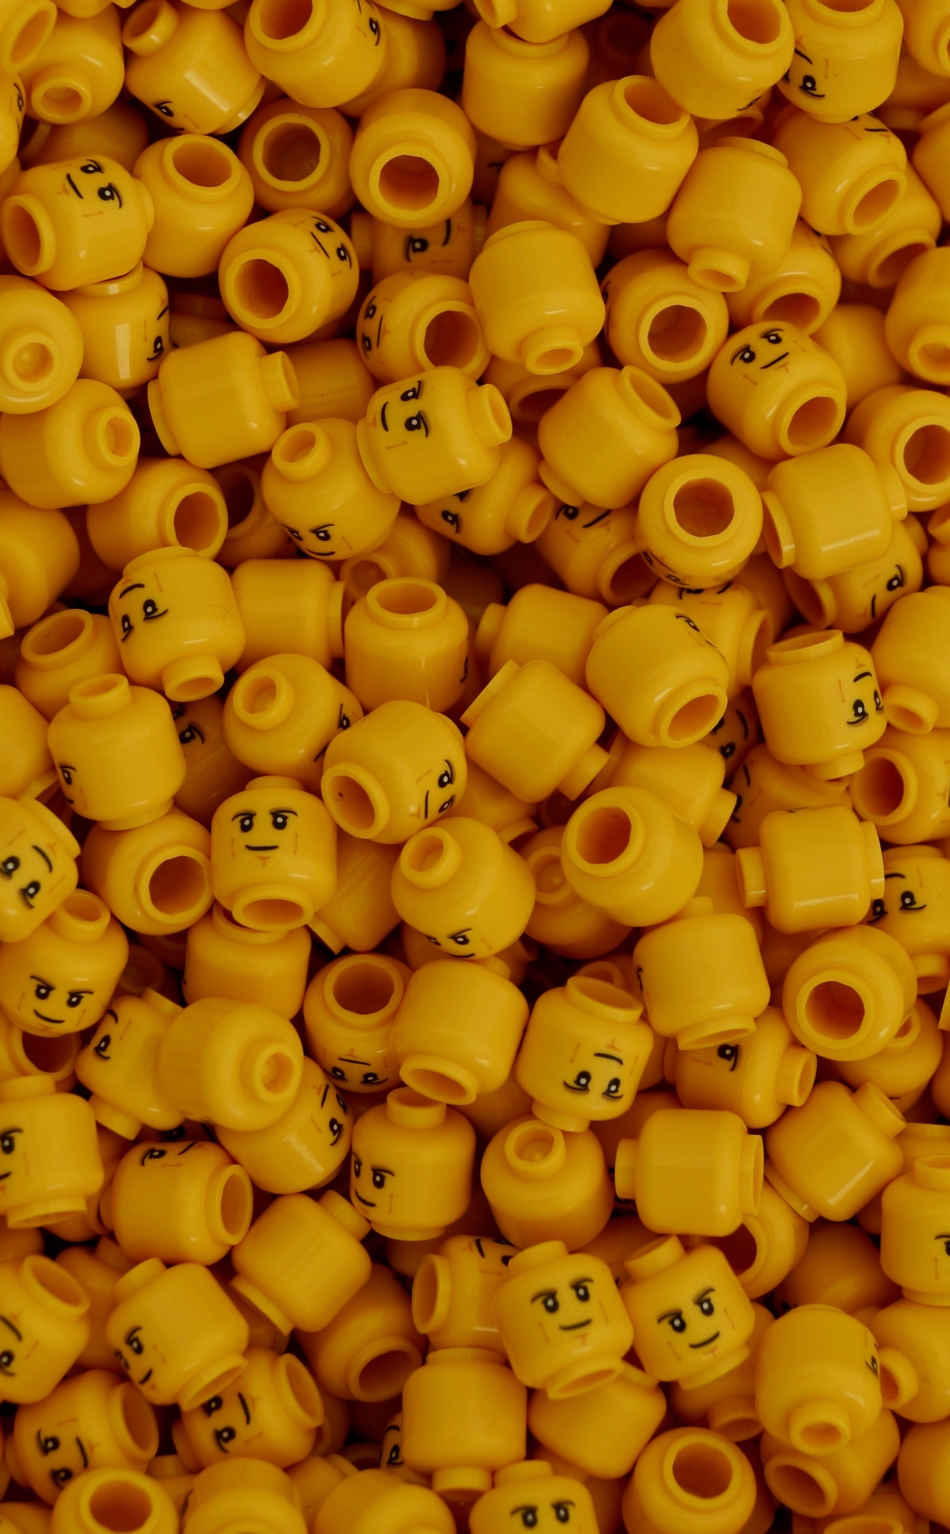 Yellow, Lego, toy, 950x1534 wallpaper